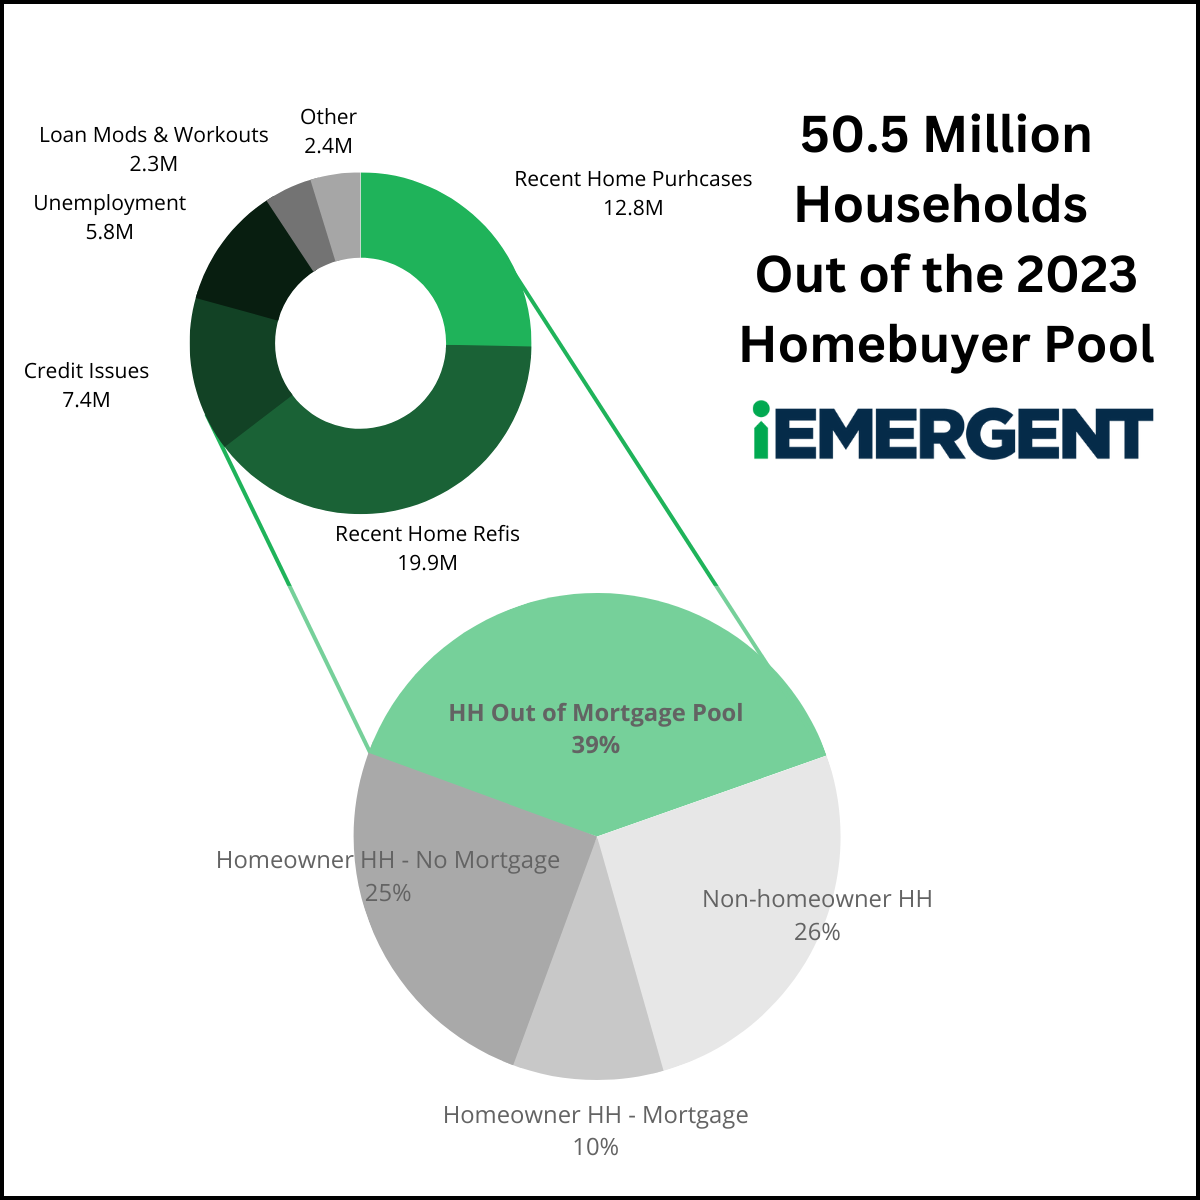 iEmergent - Homeownership Pool 2023